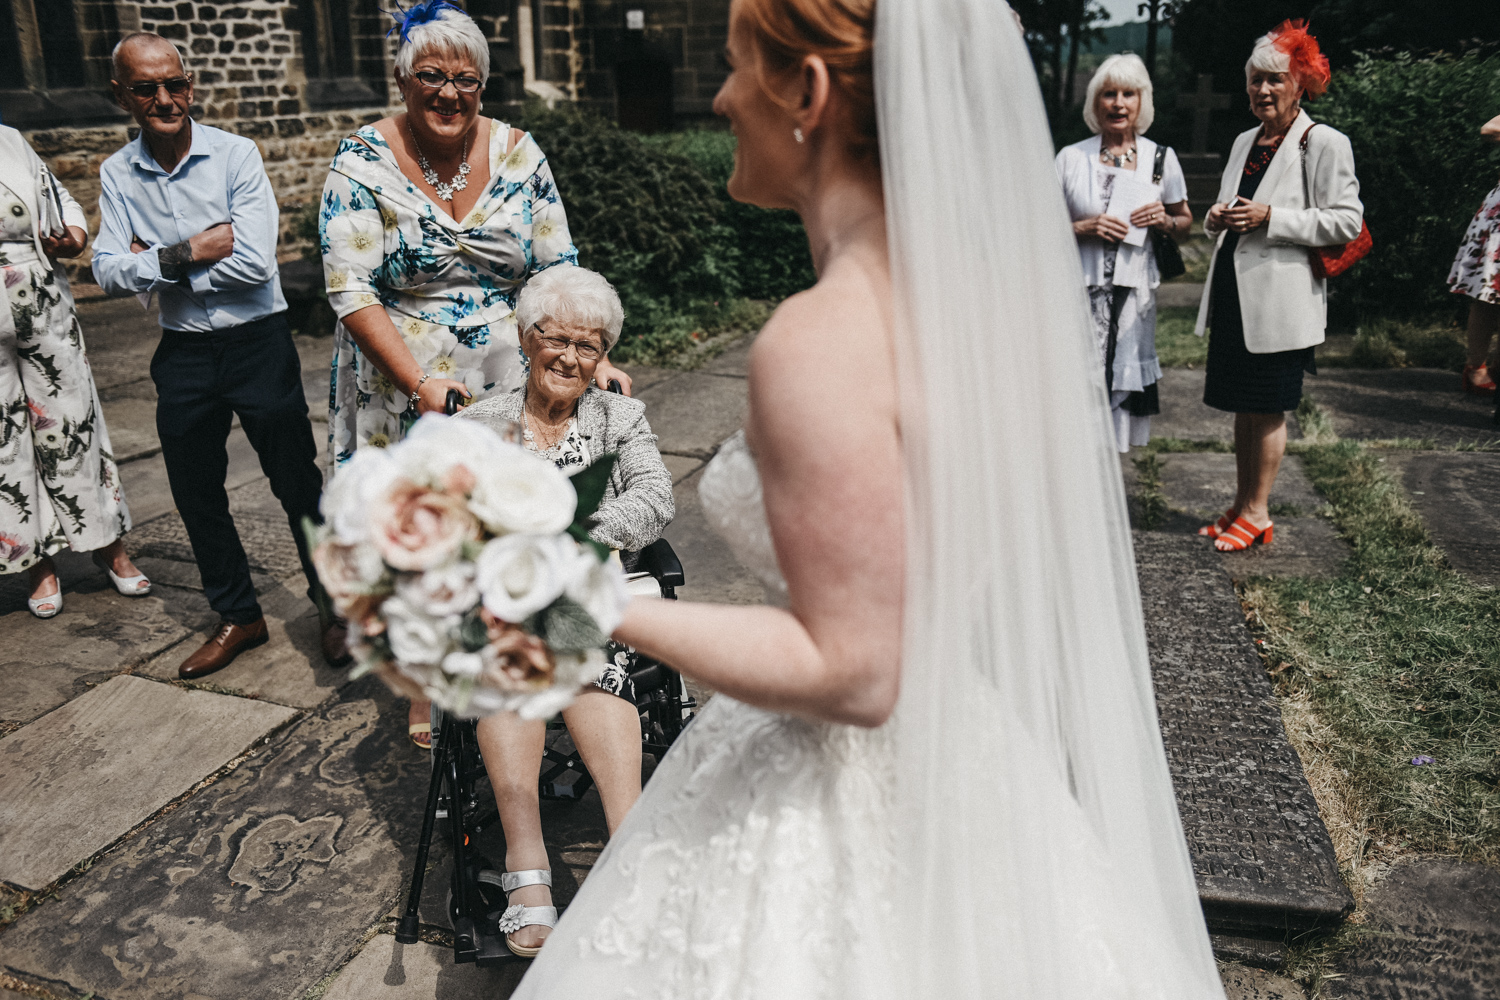 Old lady congratulating the bride